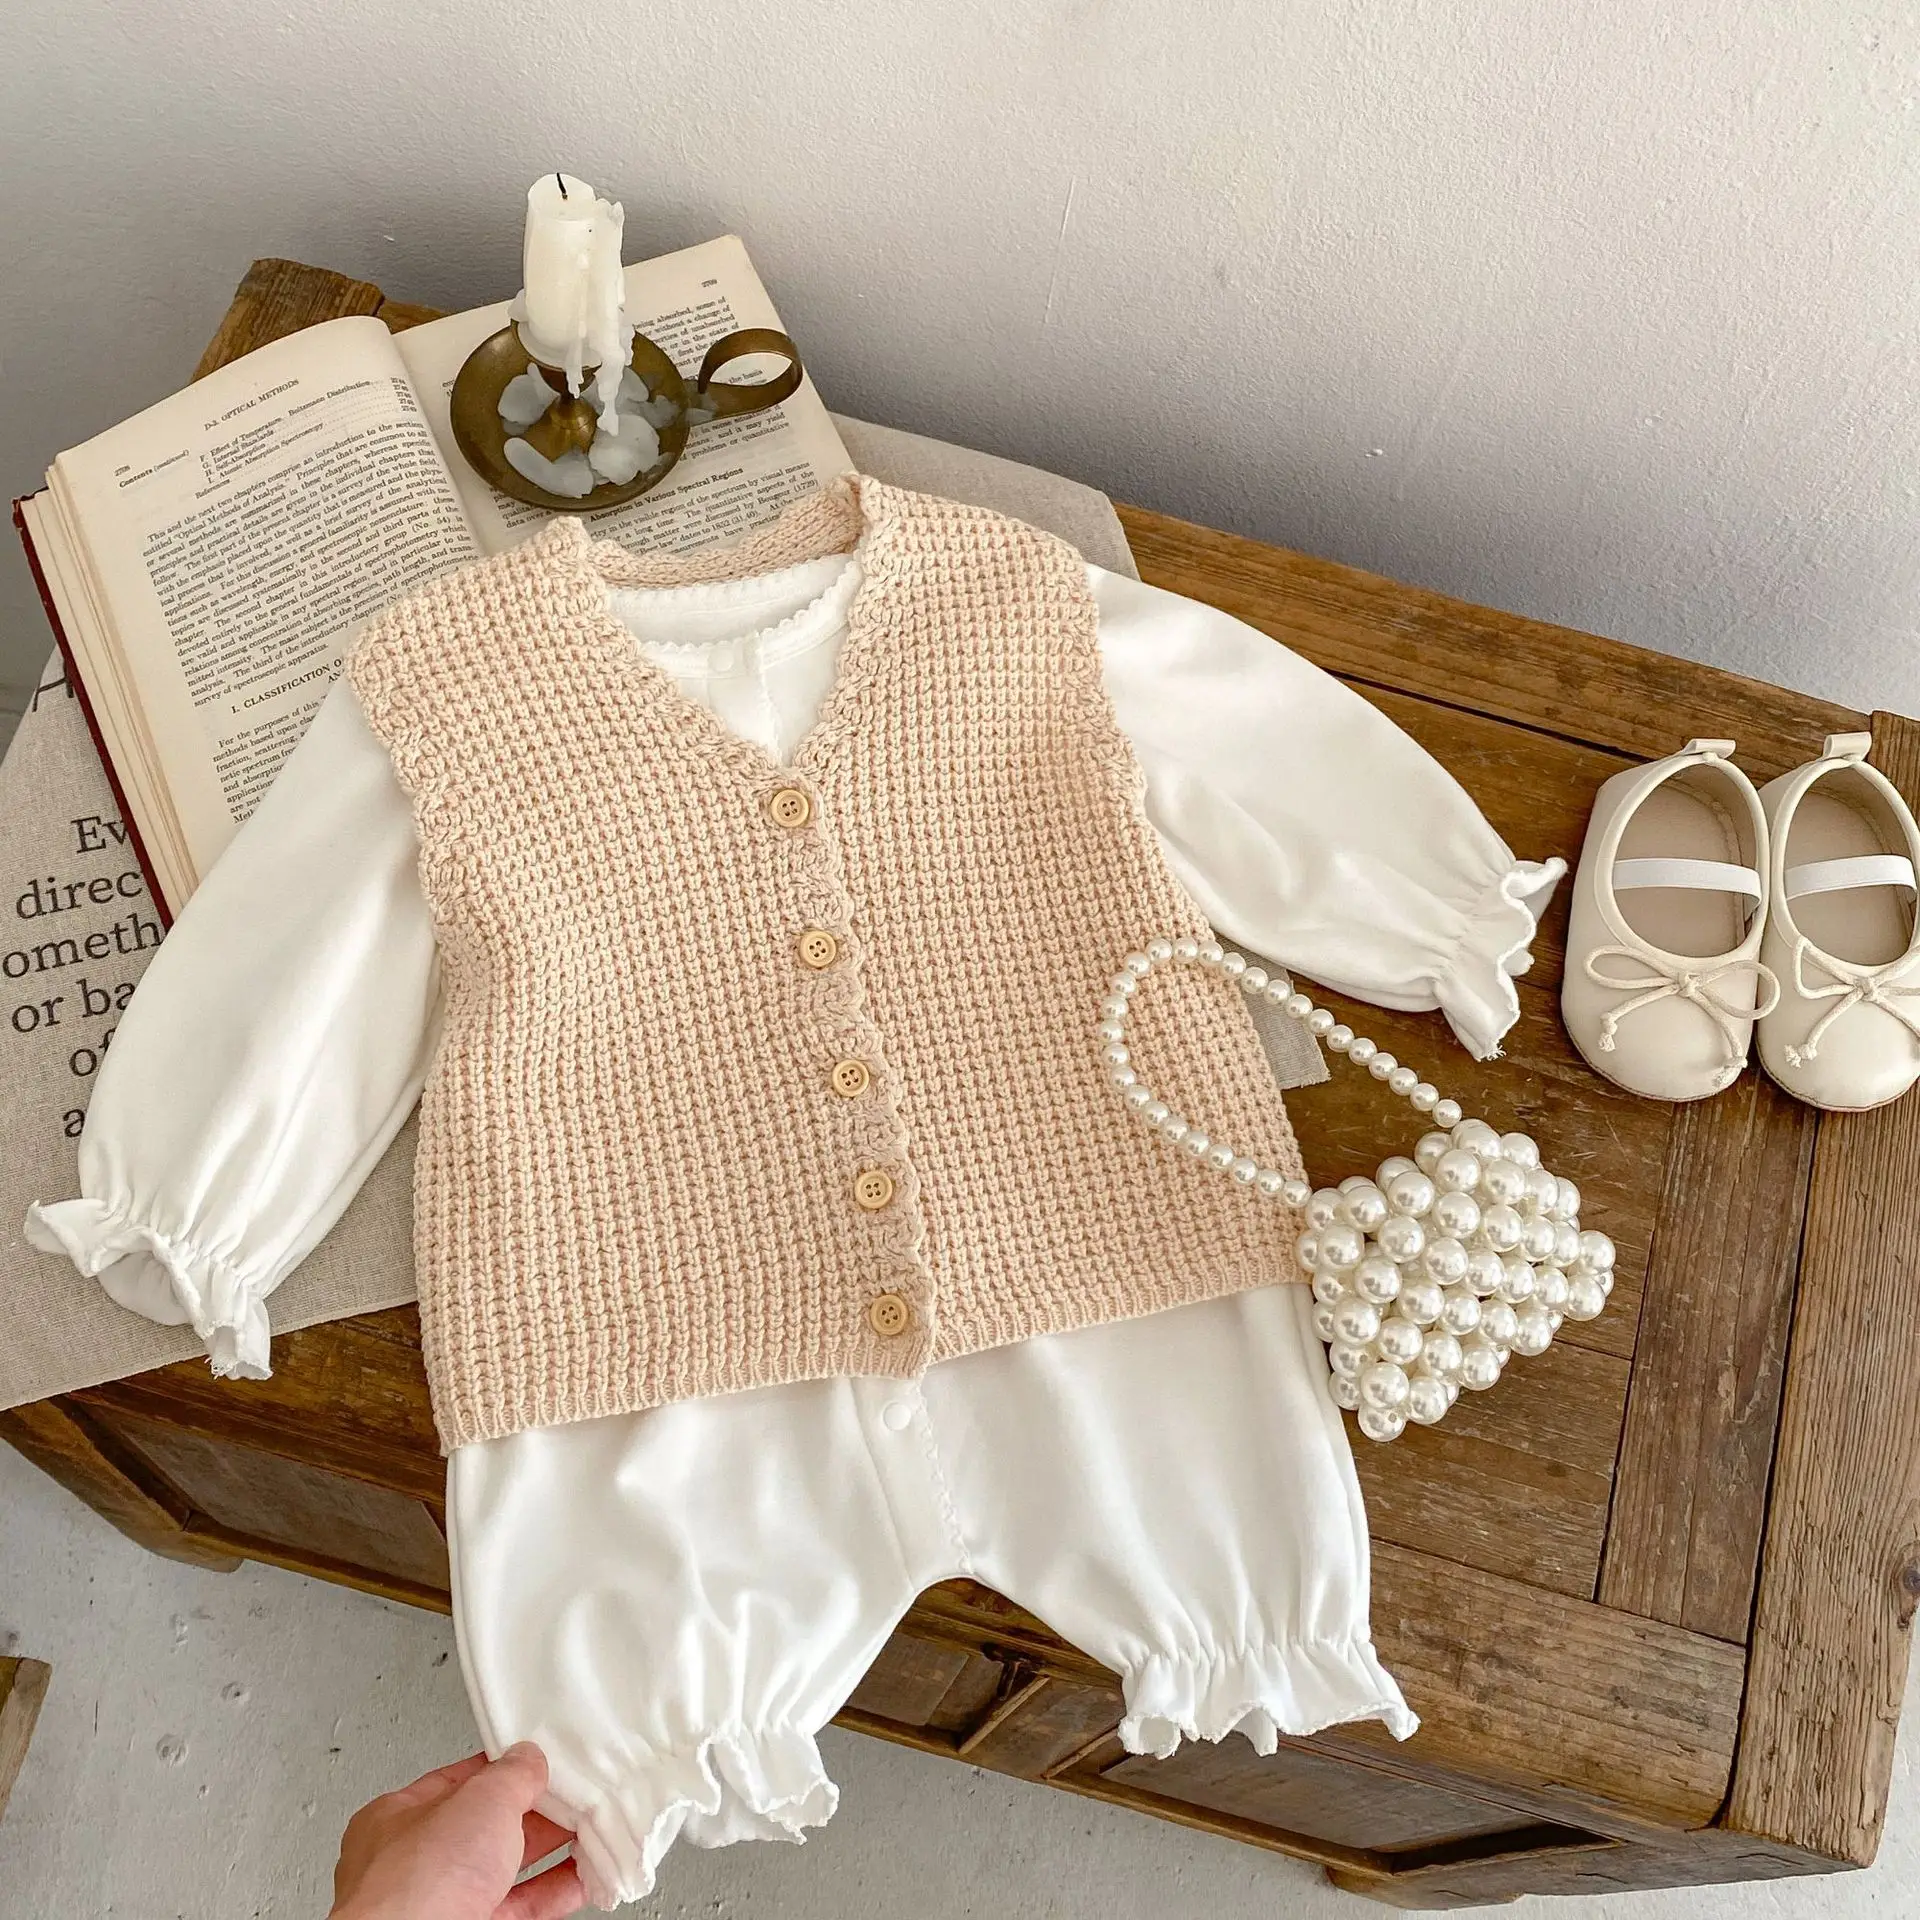 Engepapa Autumn Girls' Jumpsuit Long Sleeved Baby Clothes Cotton Round Neck Infant Bodysuit